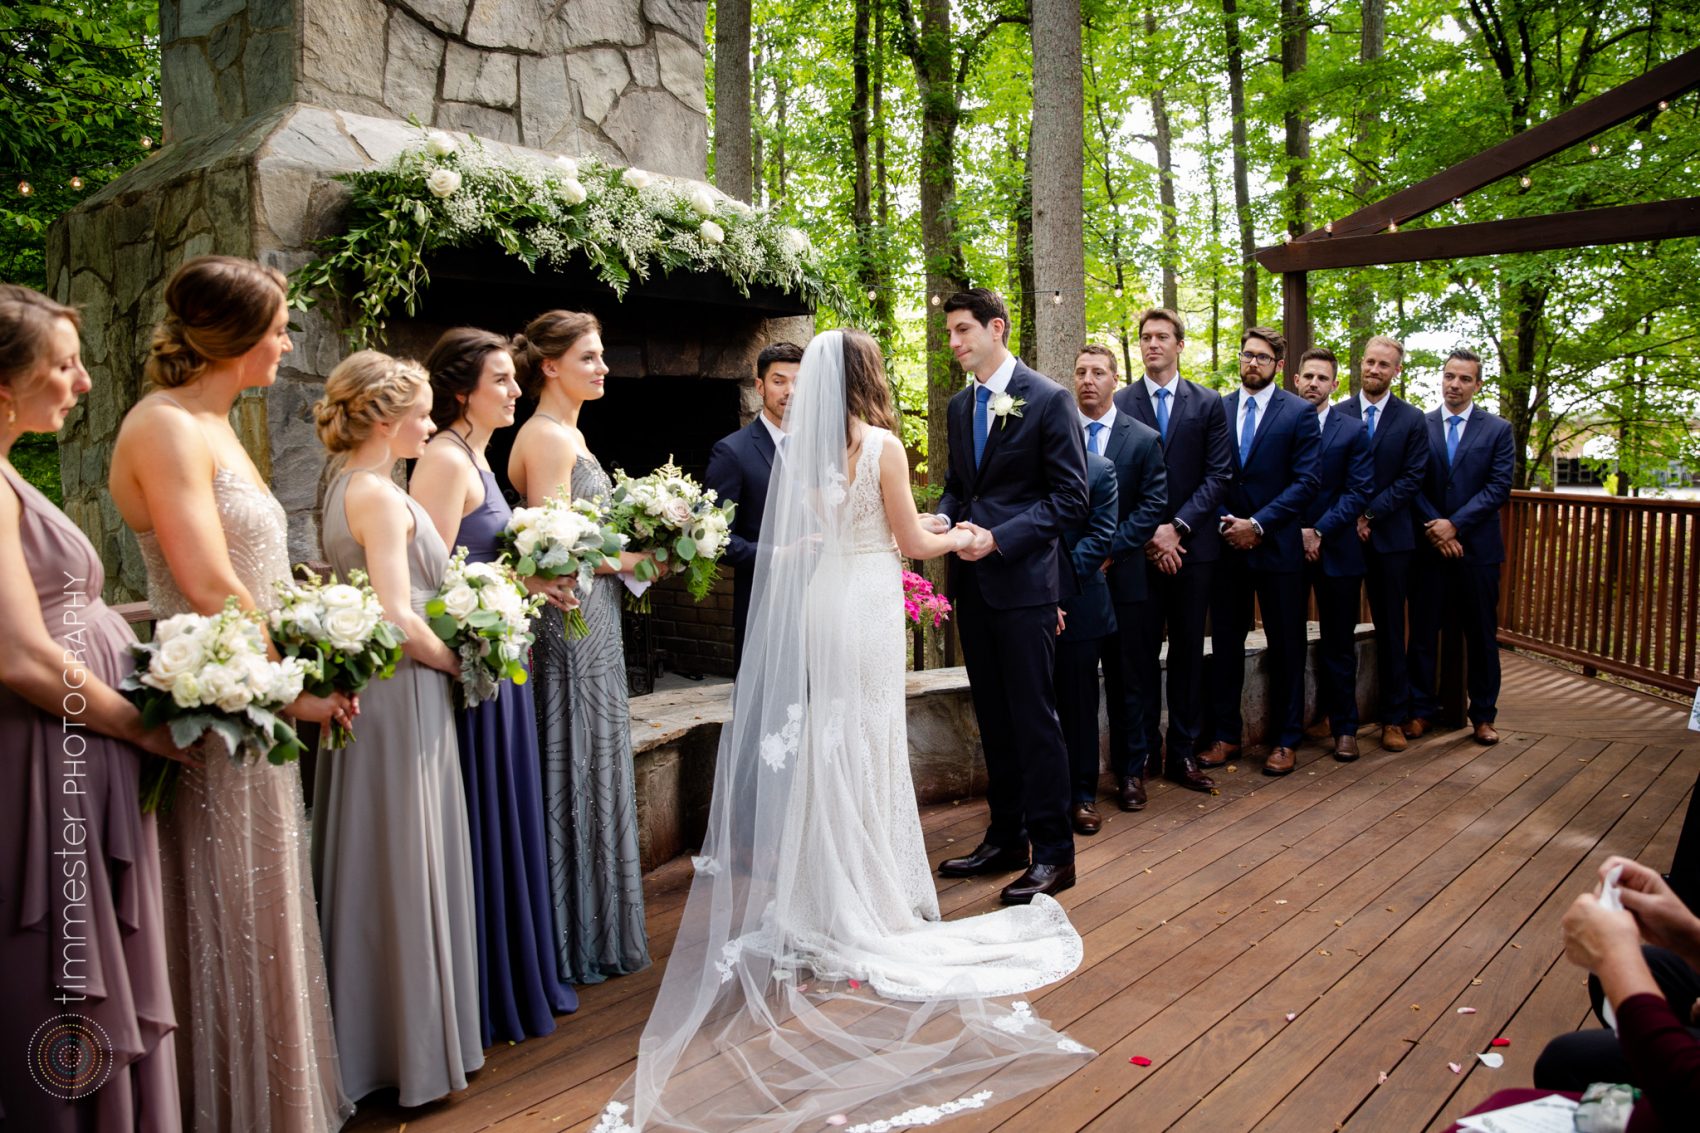 An outdoor wedding ceremony in North Carolina at the Barn at Valhalla.